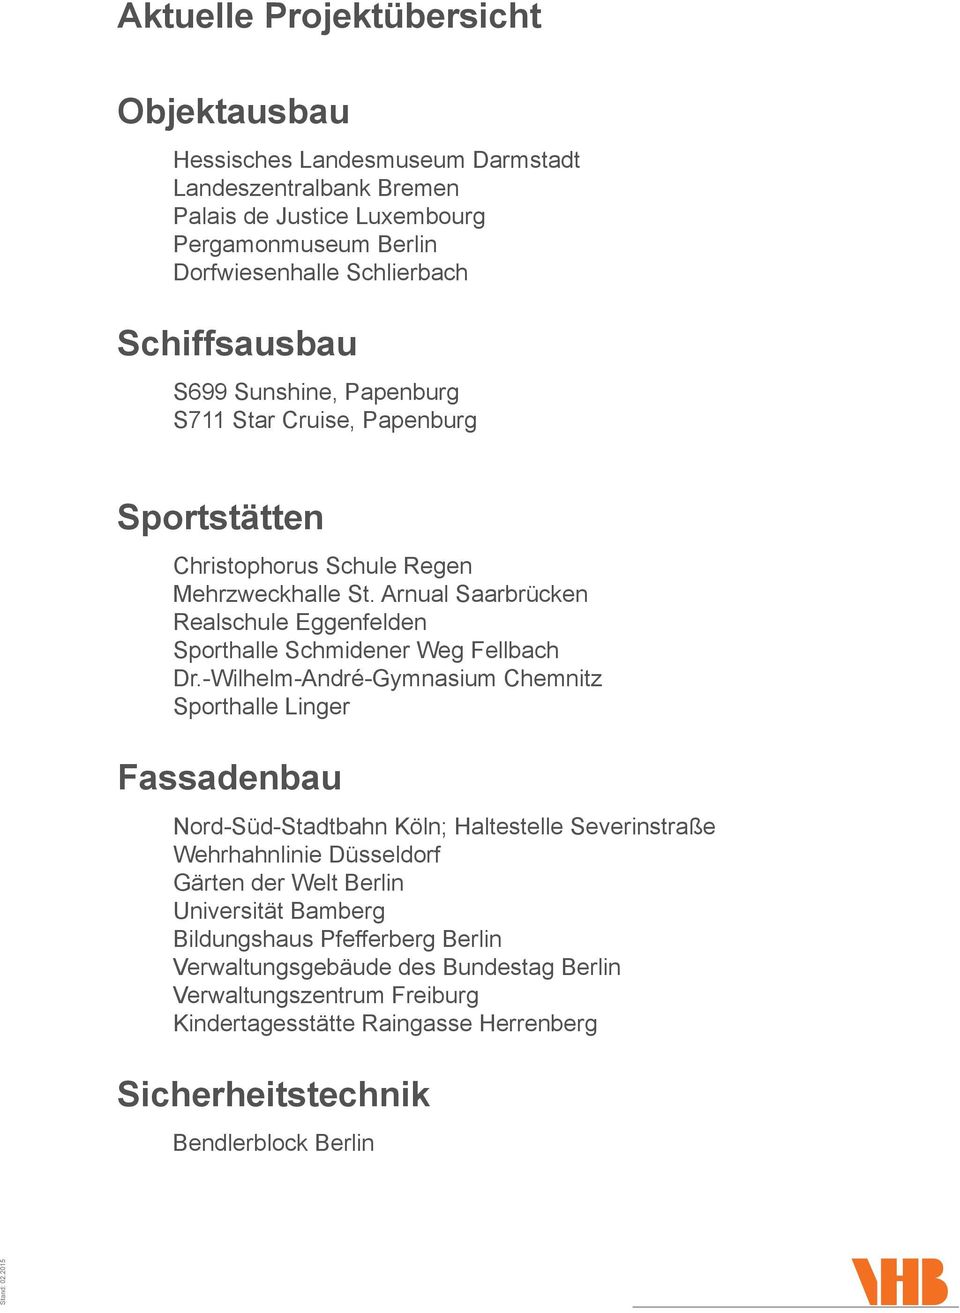 Arnual Saarbrücken Realschule Eggenfelden Sporthalle Schmidener Weg Fellbach Dr.